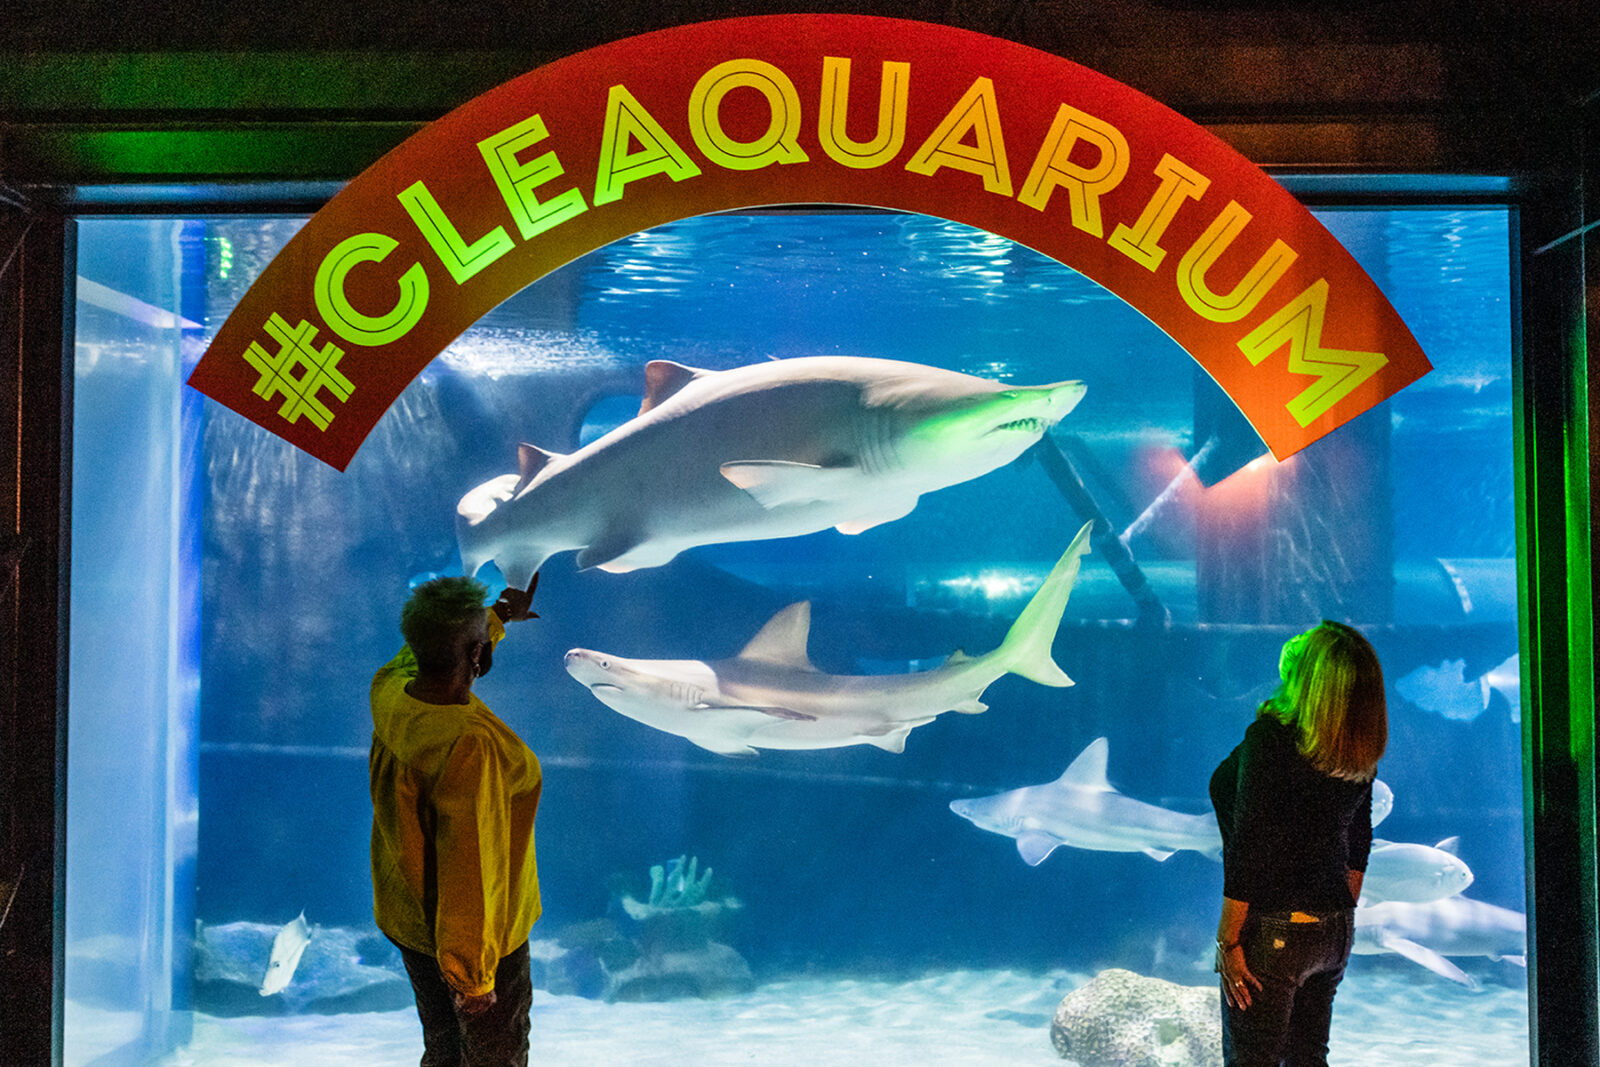 Shark Gallery at Greater Cleveland Aquarium